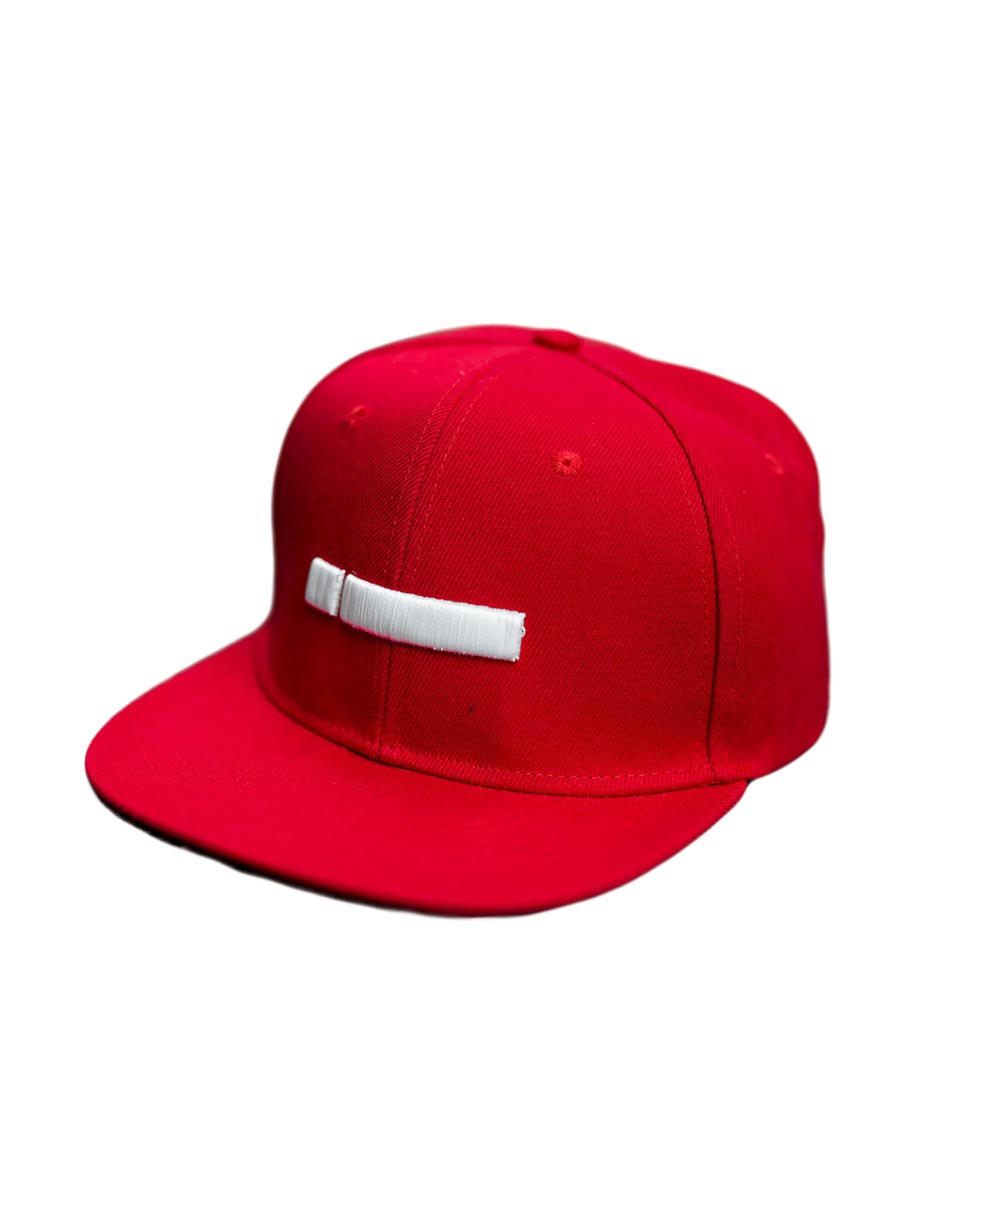 leuko red kapelo hat snapback me white logo kenthmeno mprosta fashion hats